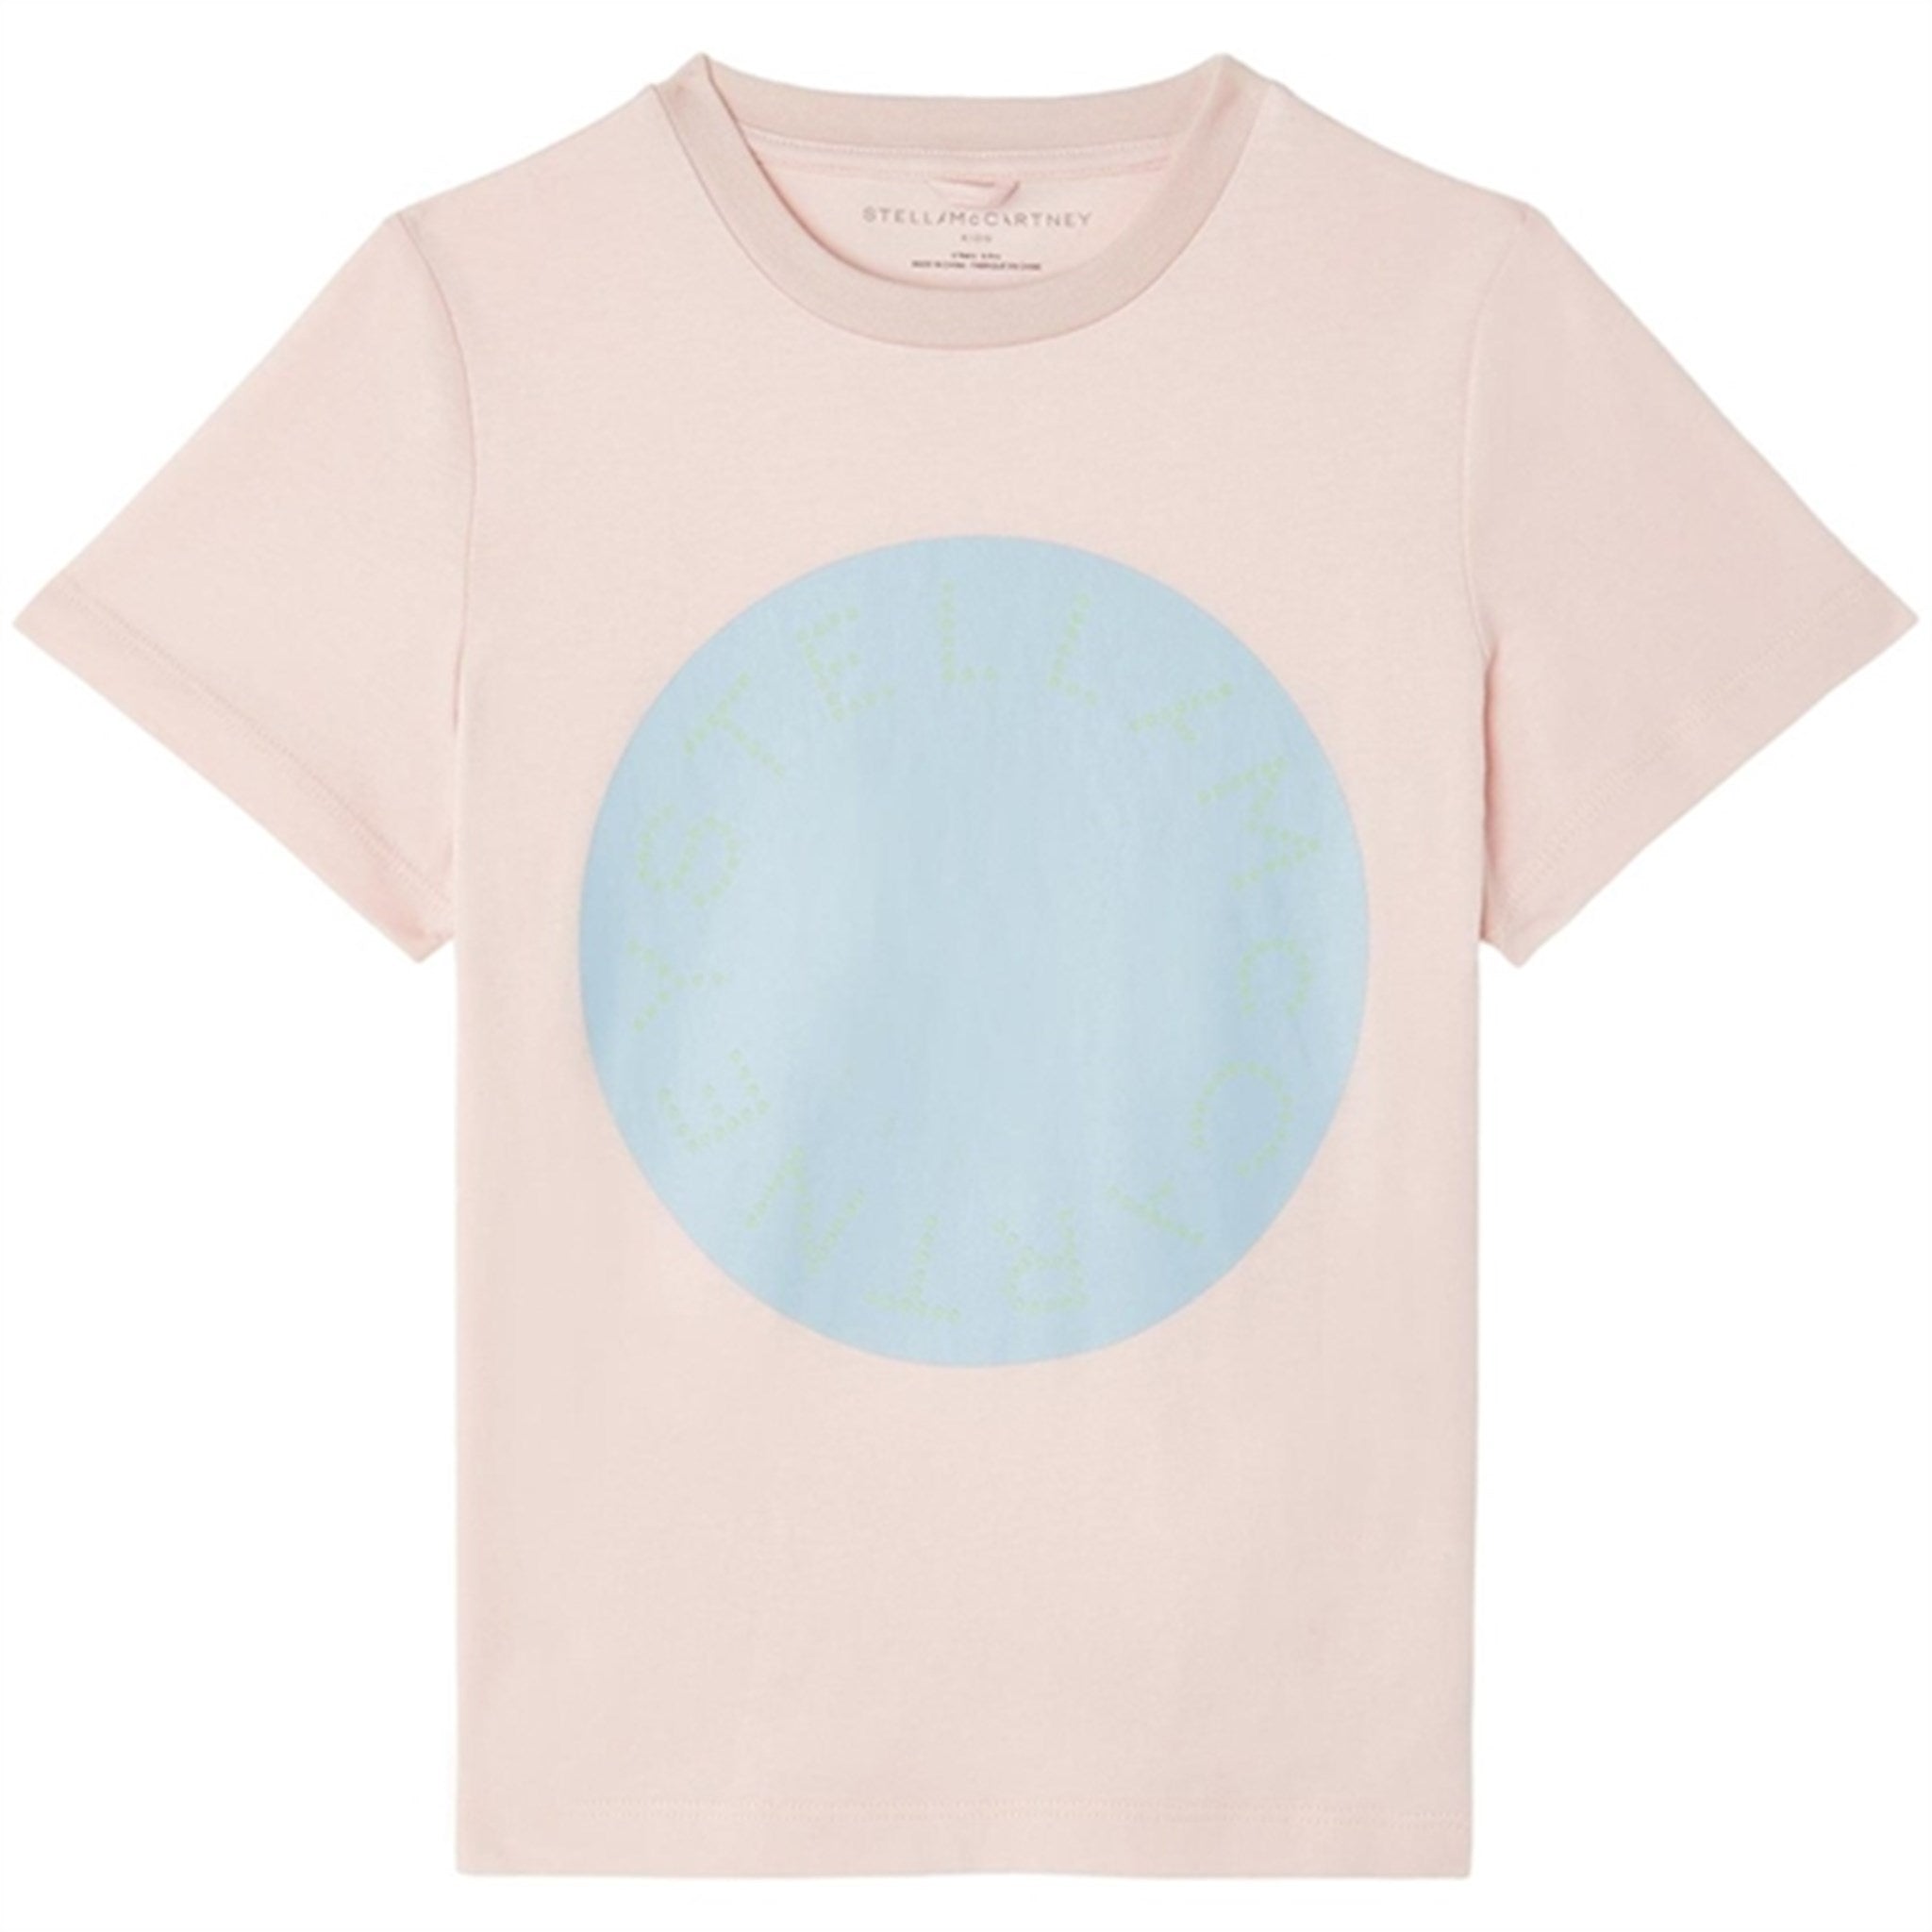 Stella McCartney Pink T-Shirt